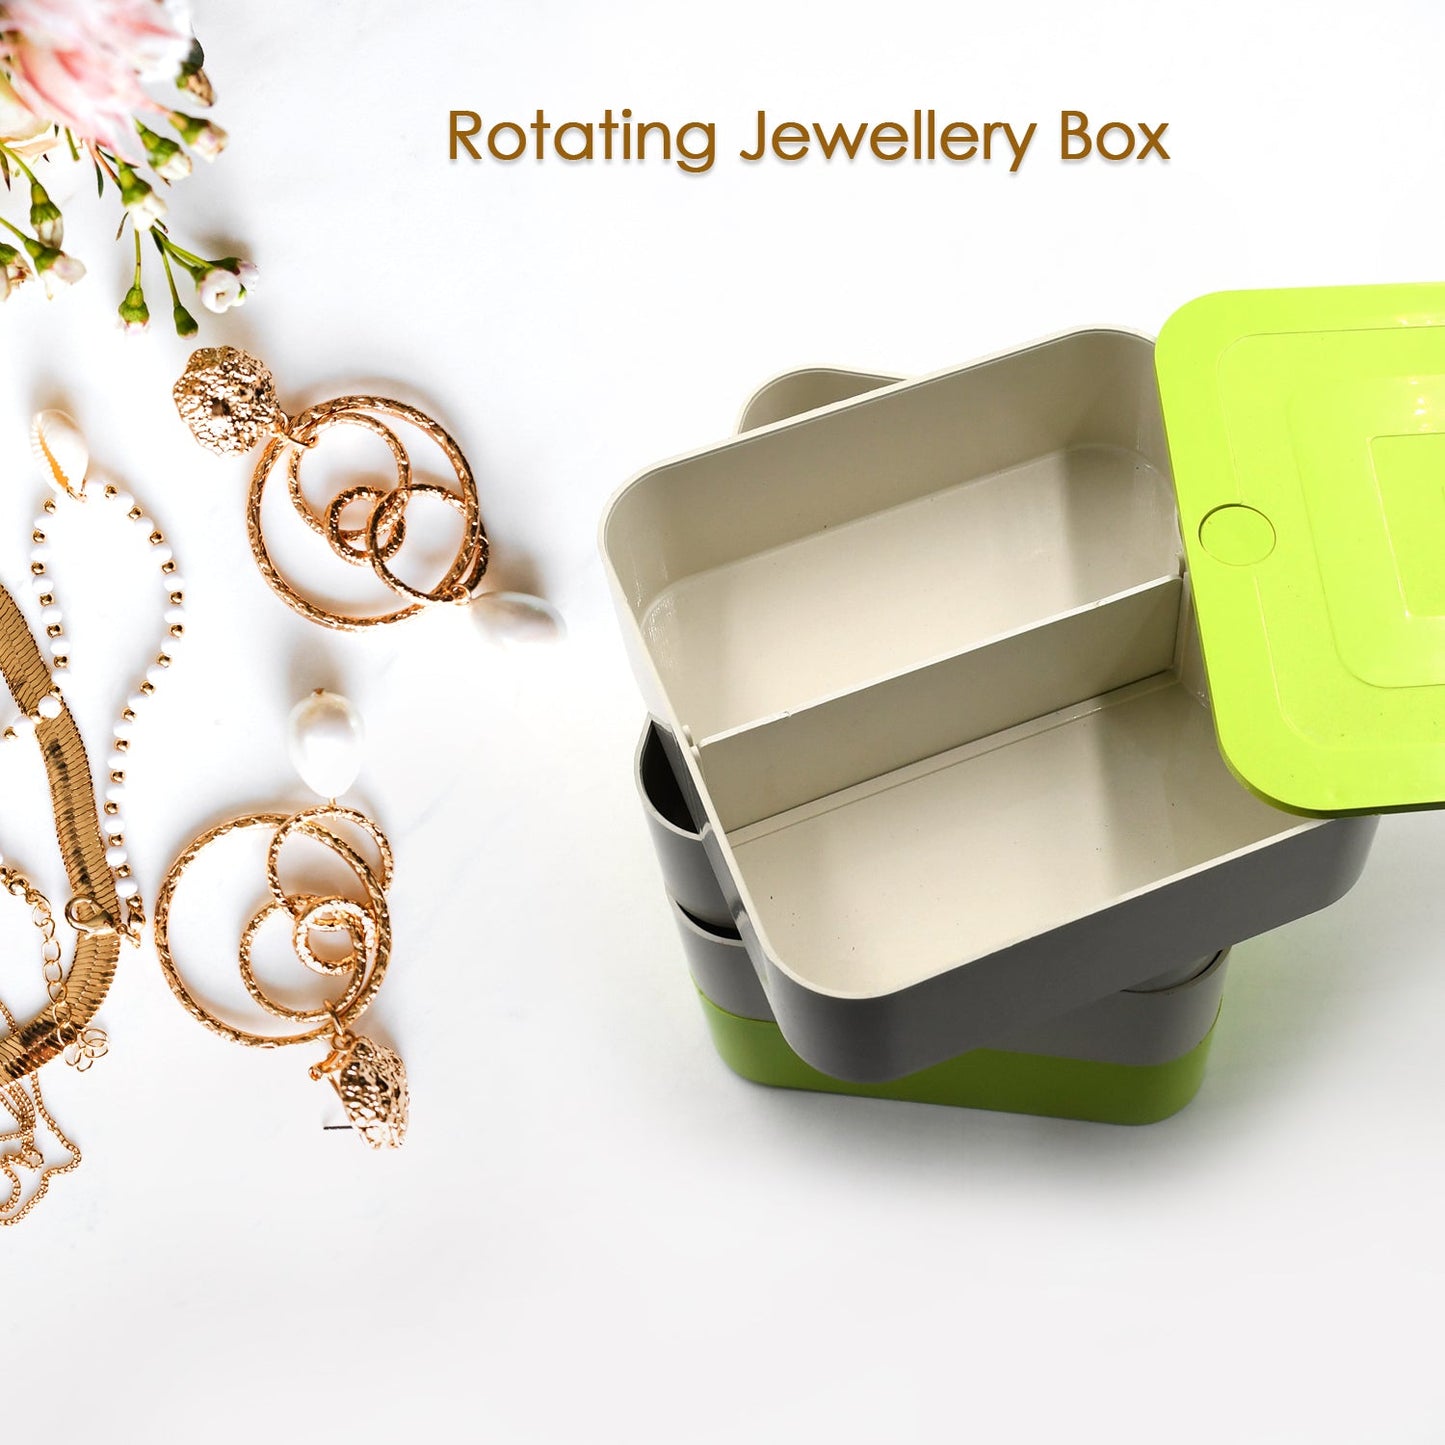 4700 4 Layers Jewelry Box, 360 Degree Rotating Jewelry Box, Jewelry and Earring Organizer Box, Accessory Storage Box